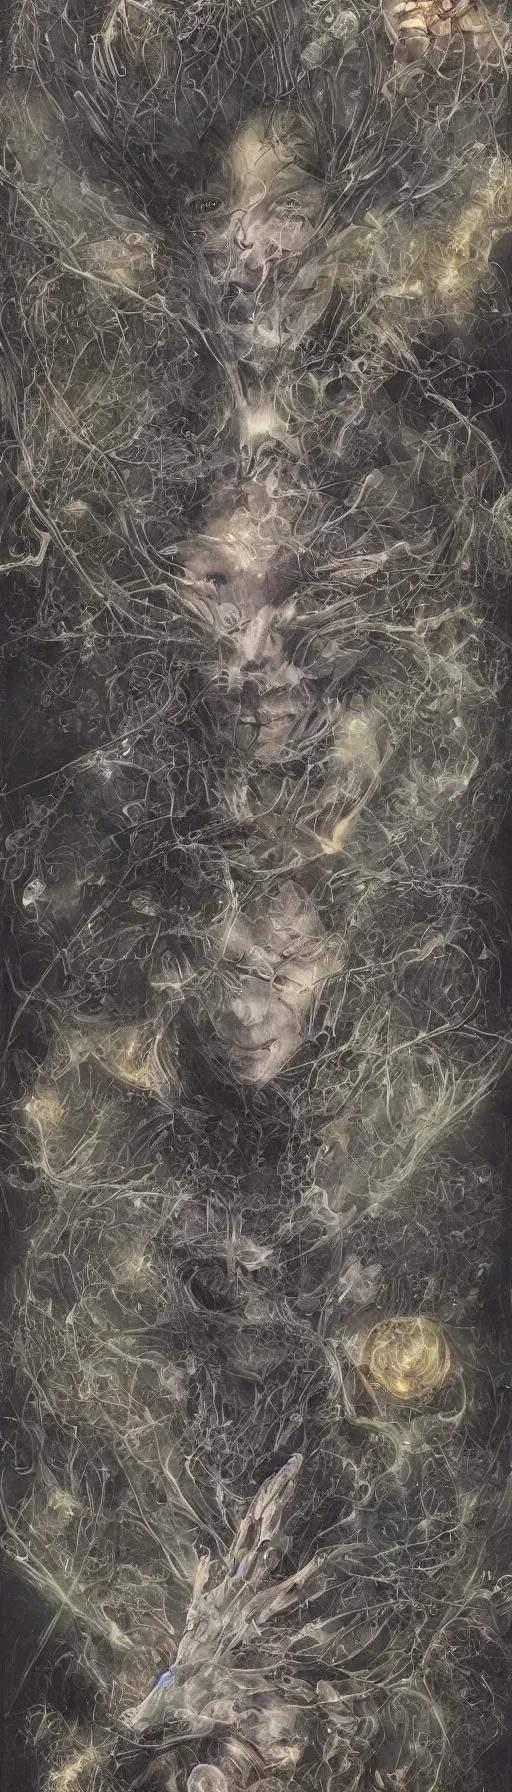 Image similar to the ghost in the machine, dense web of neurons firing, psychedelic lights and fog, zdzislaw, ayami kojima, yamamoto, barclay shaw, karol bak, hyperrealist, 8 k